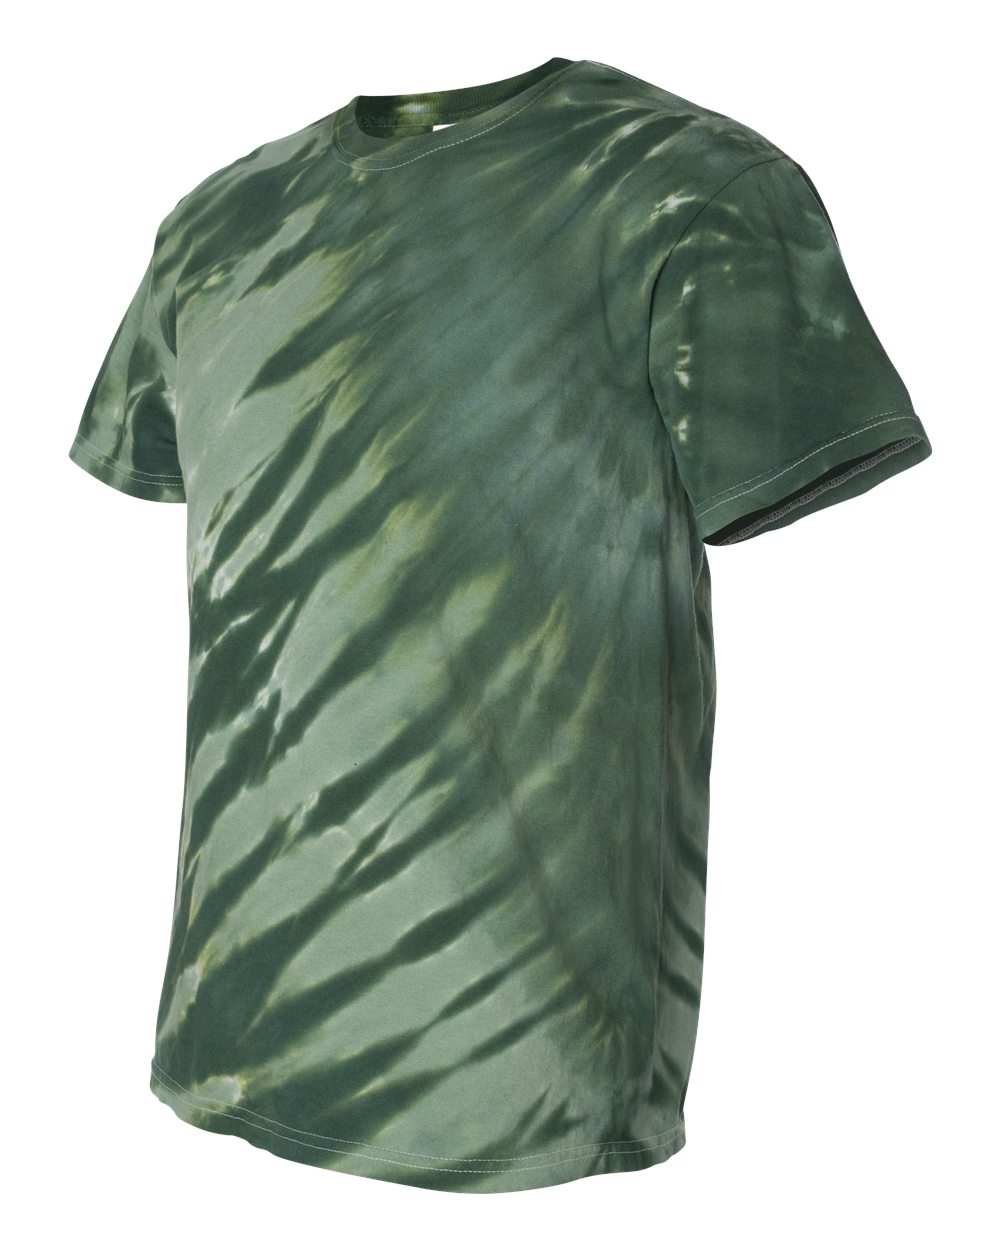 Tie-Dyed 200TS - Tiger Stripe T-Shirt